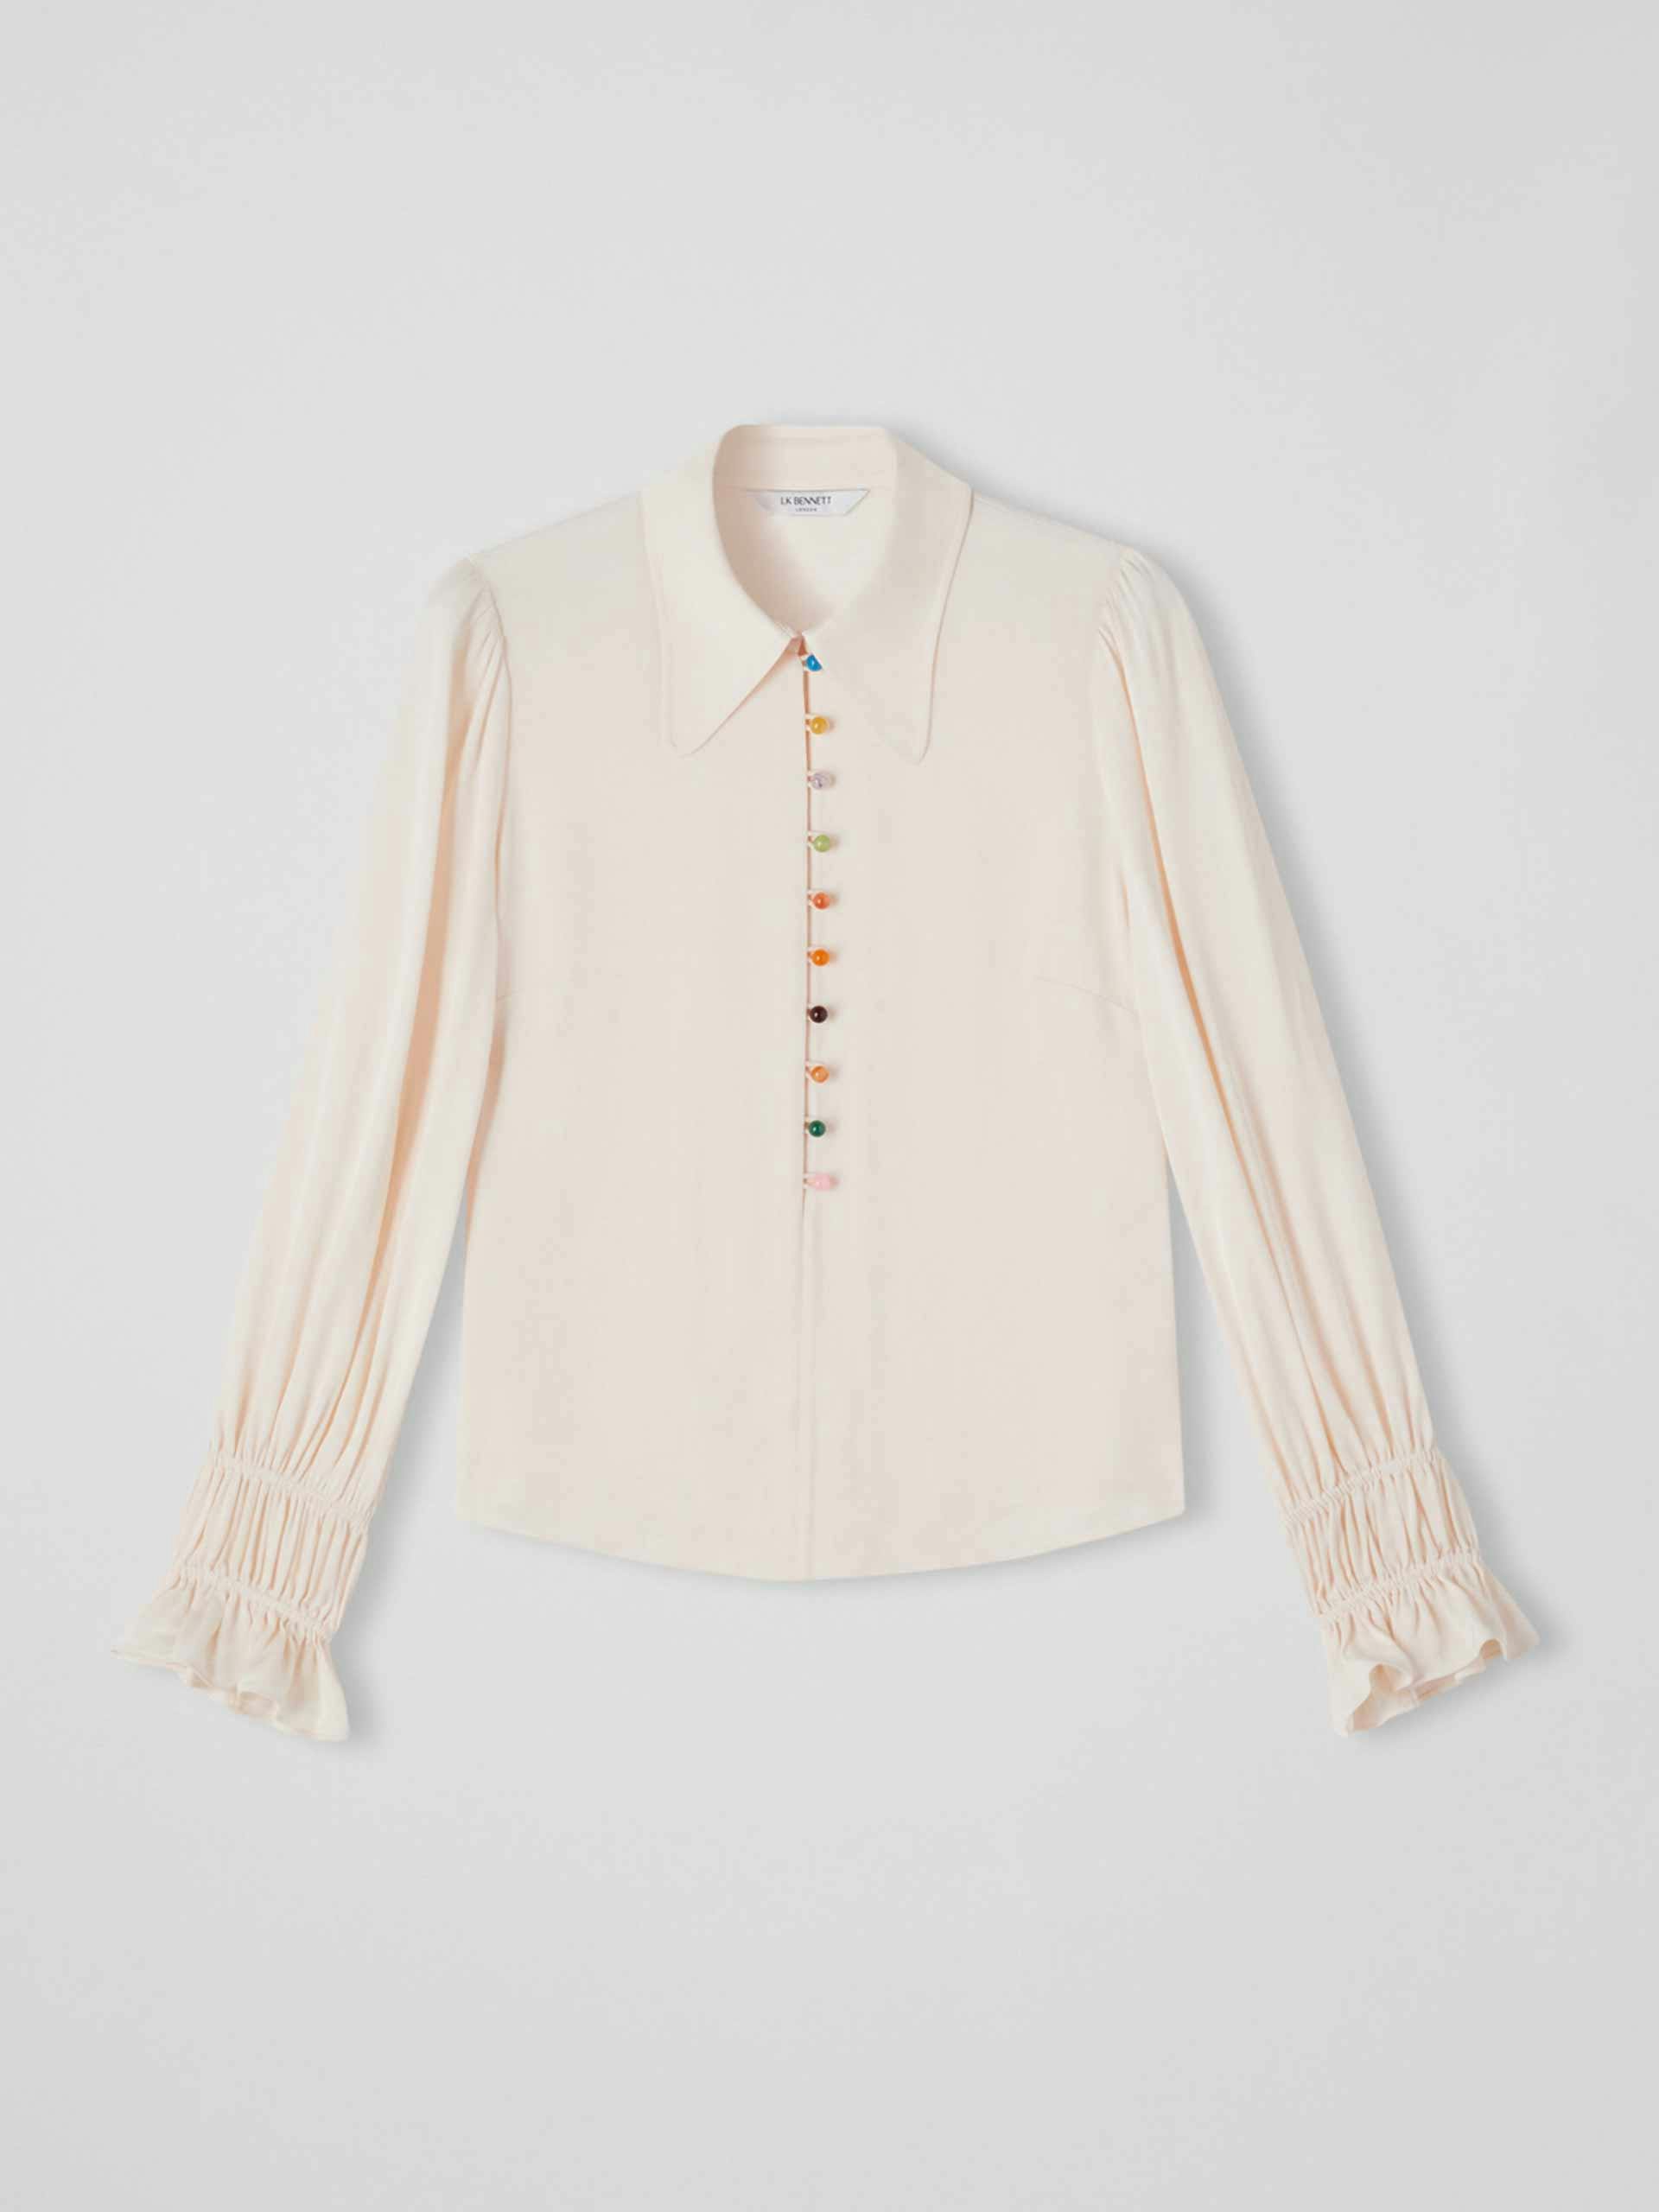 Marble button blouse